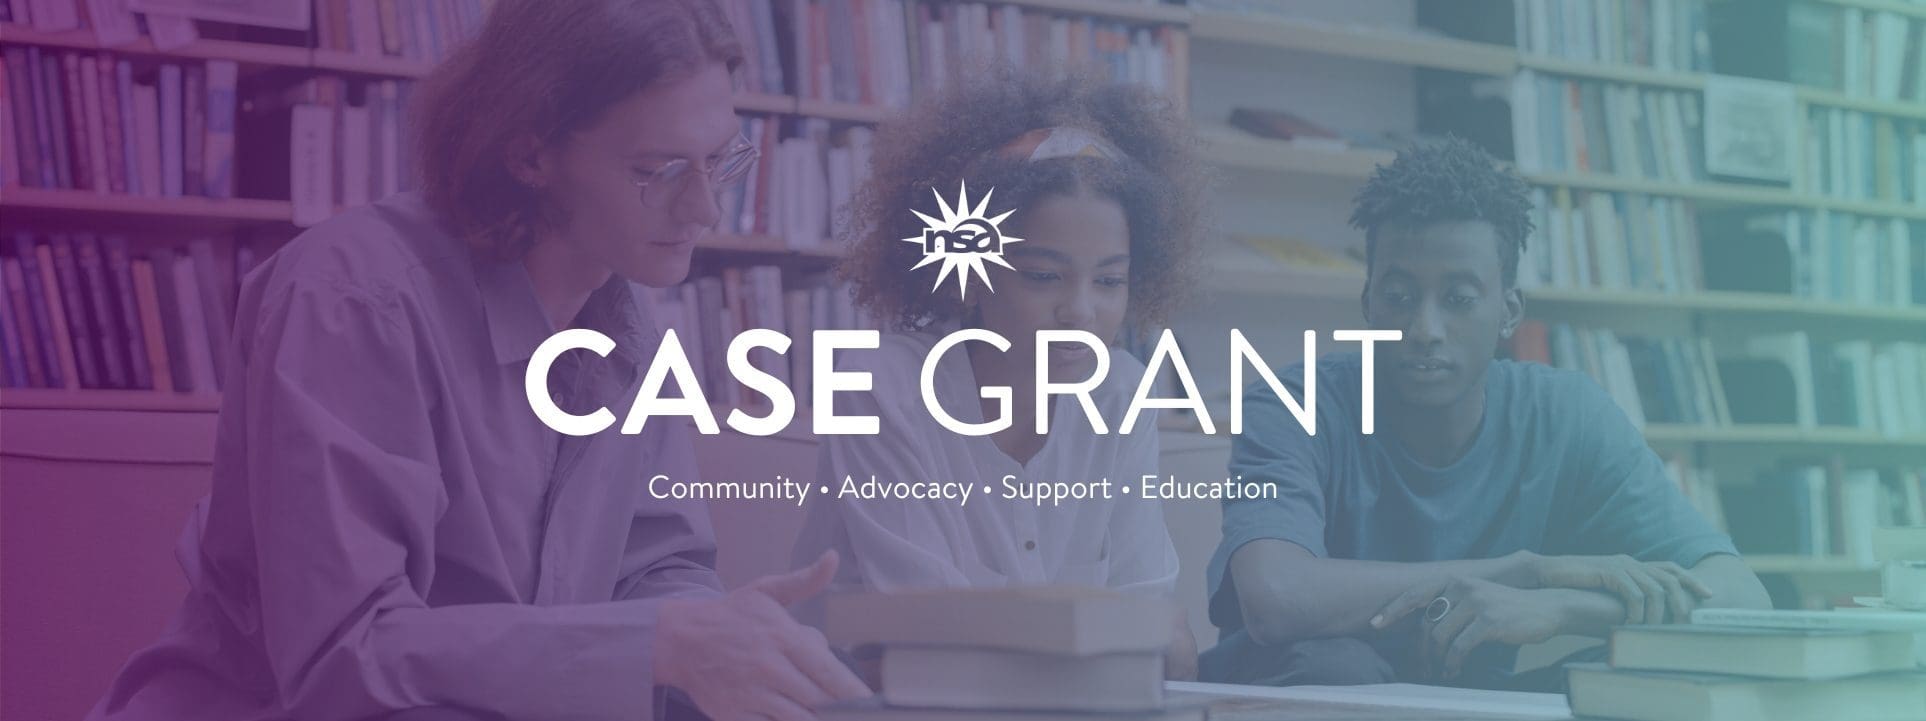 case grant banner